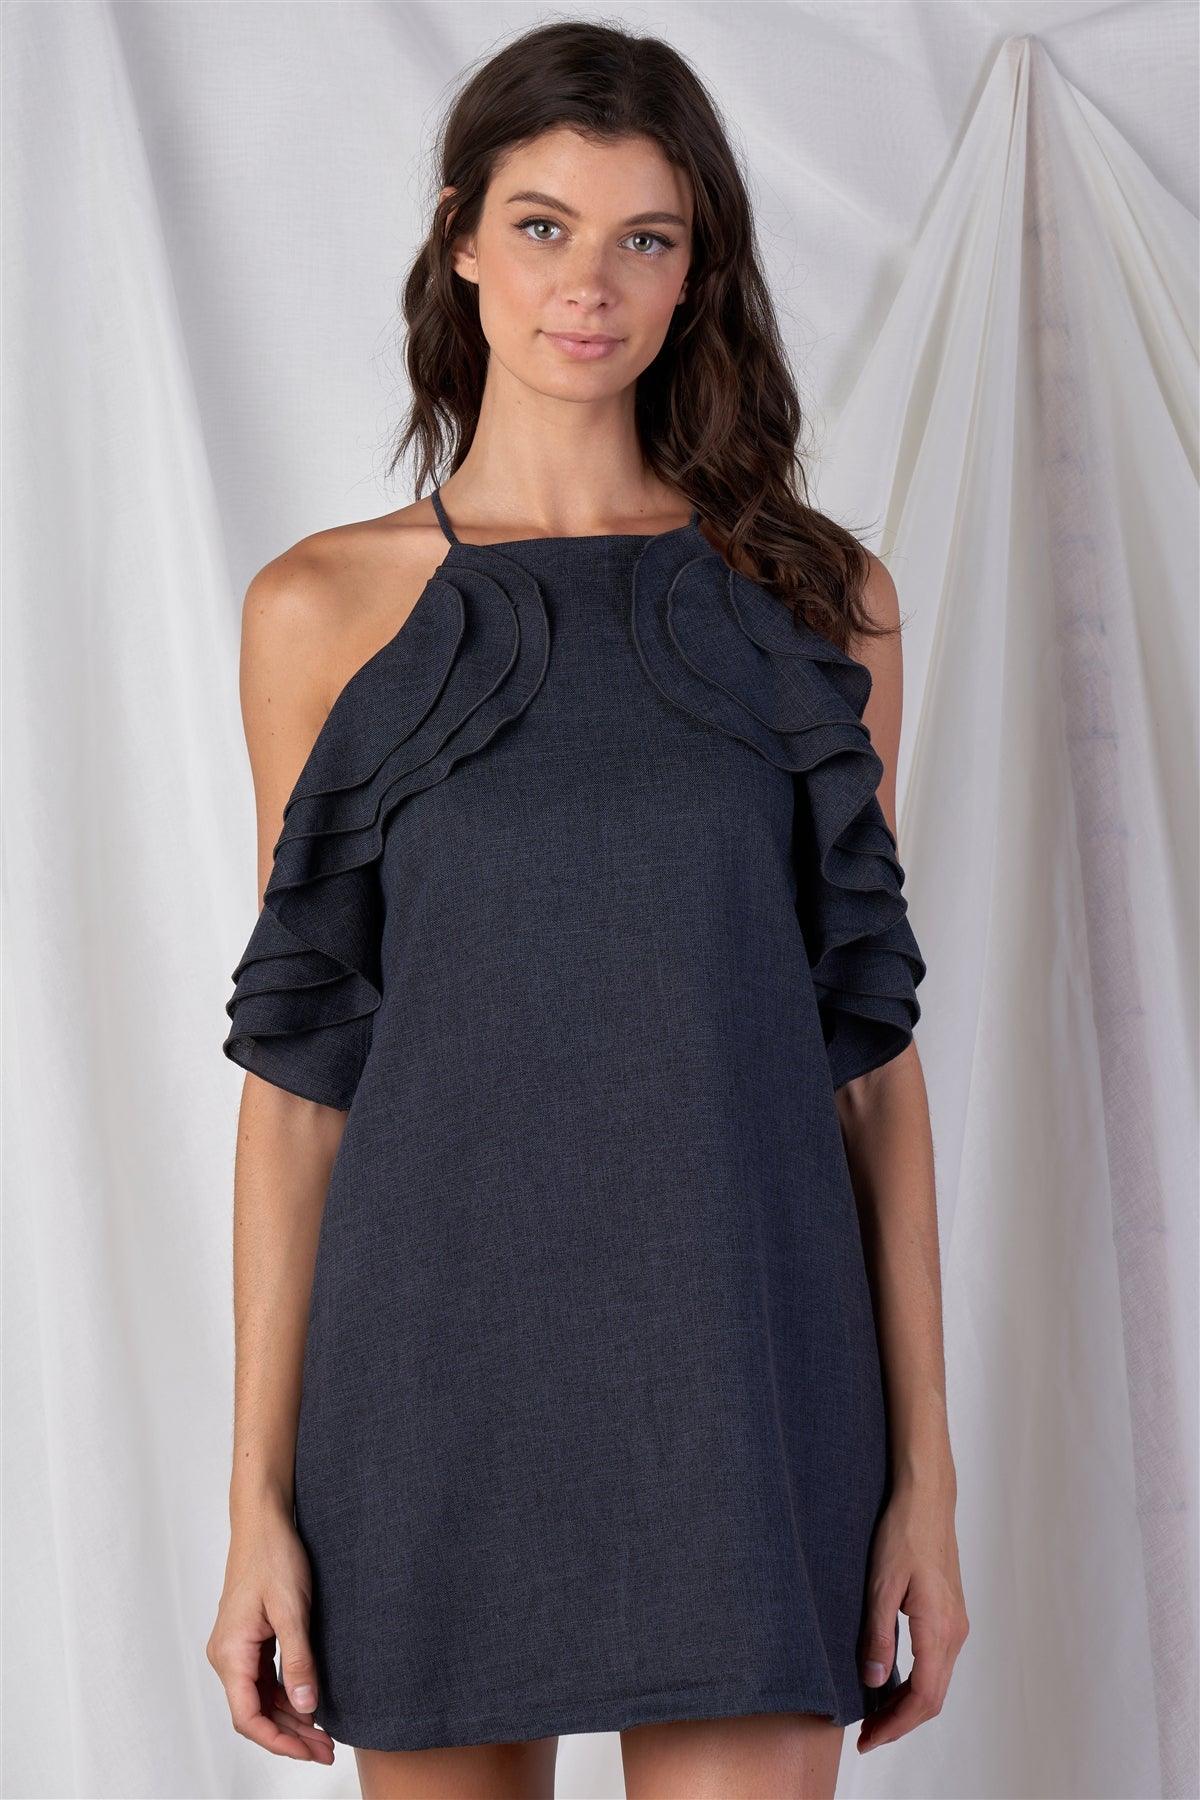 Solid Dark Grey Loose Fit Sleeveless Off-The-Shoulder Massive Triple Ruffle Hem Lined Mini Dress /1-1-2-1